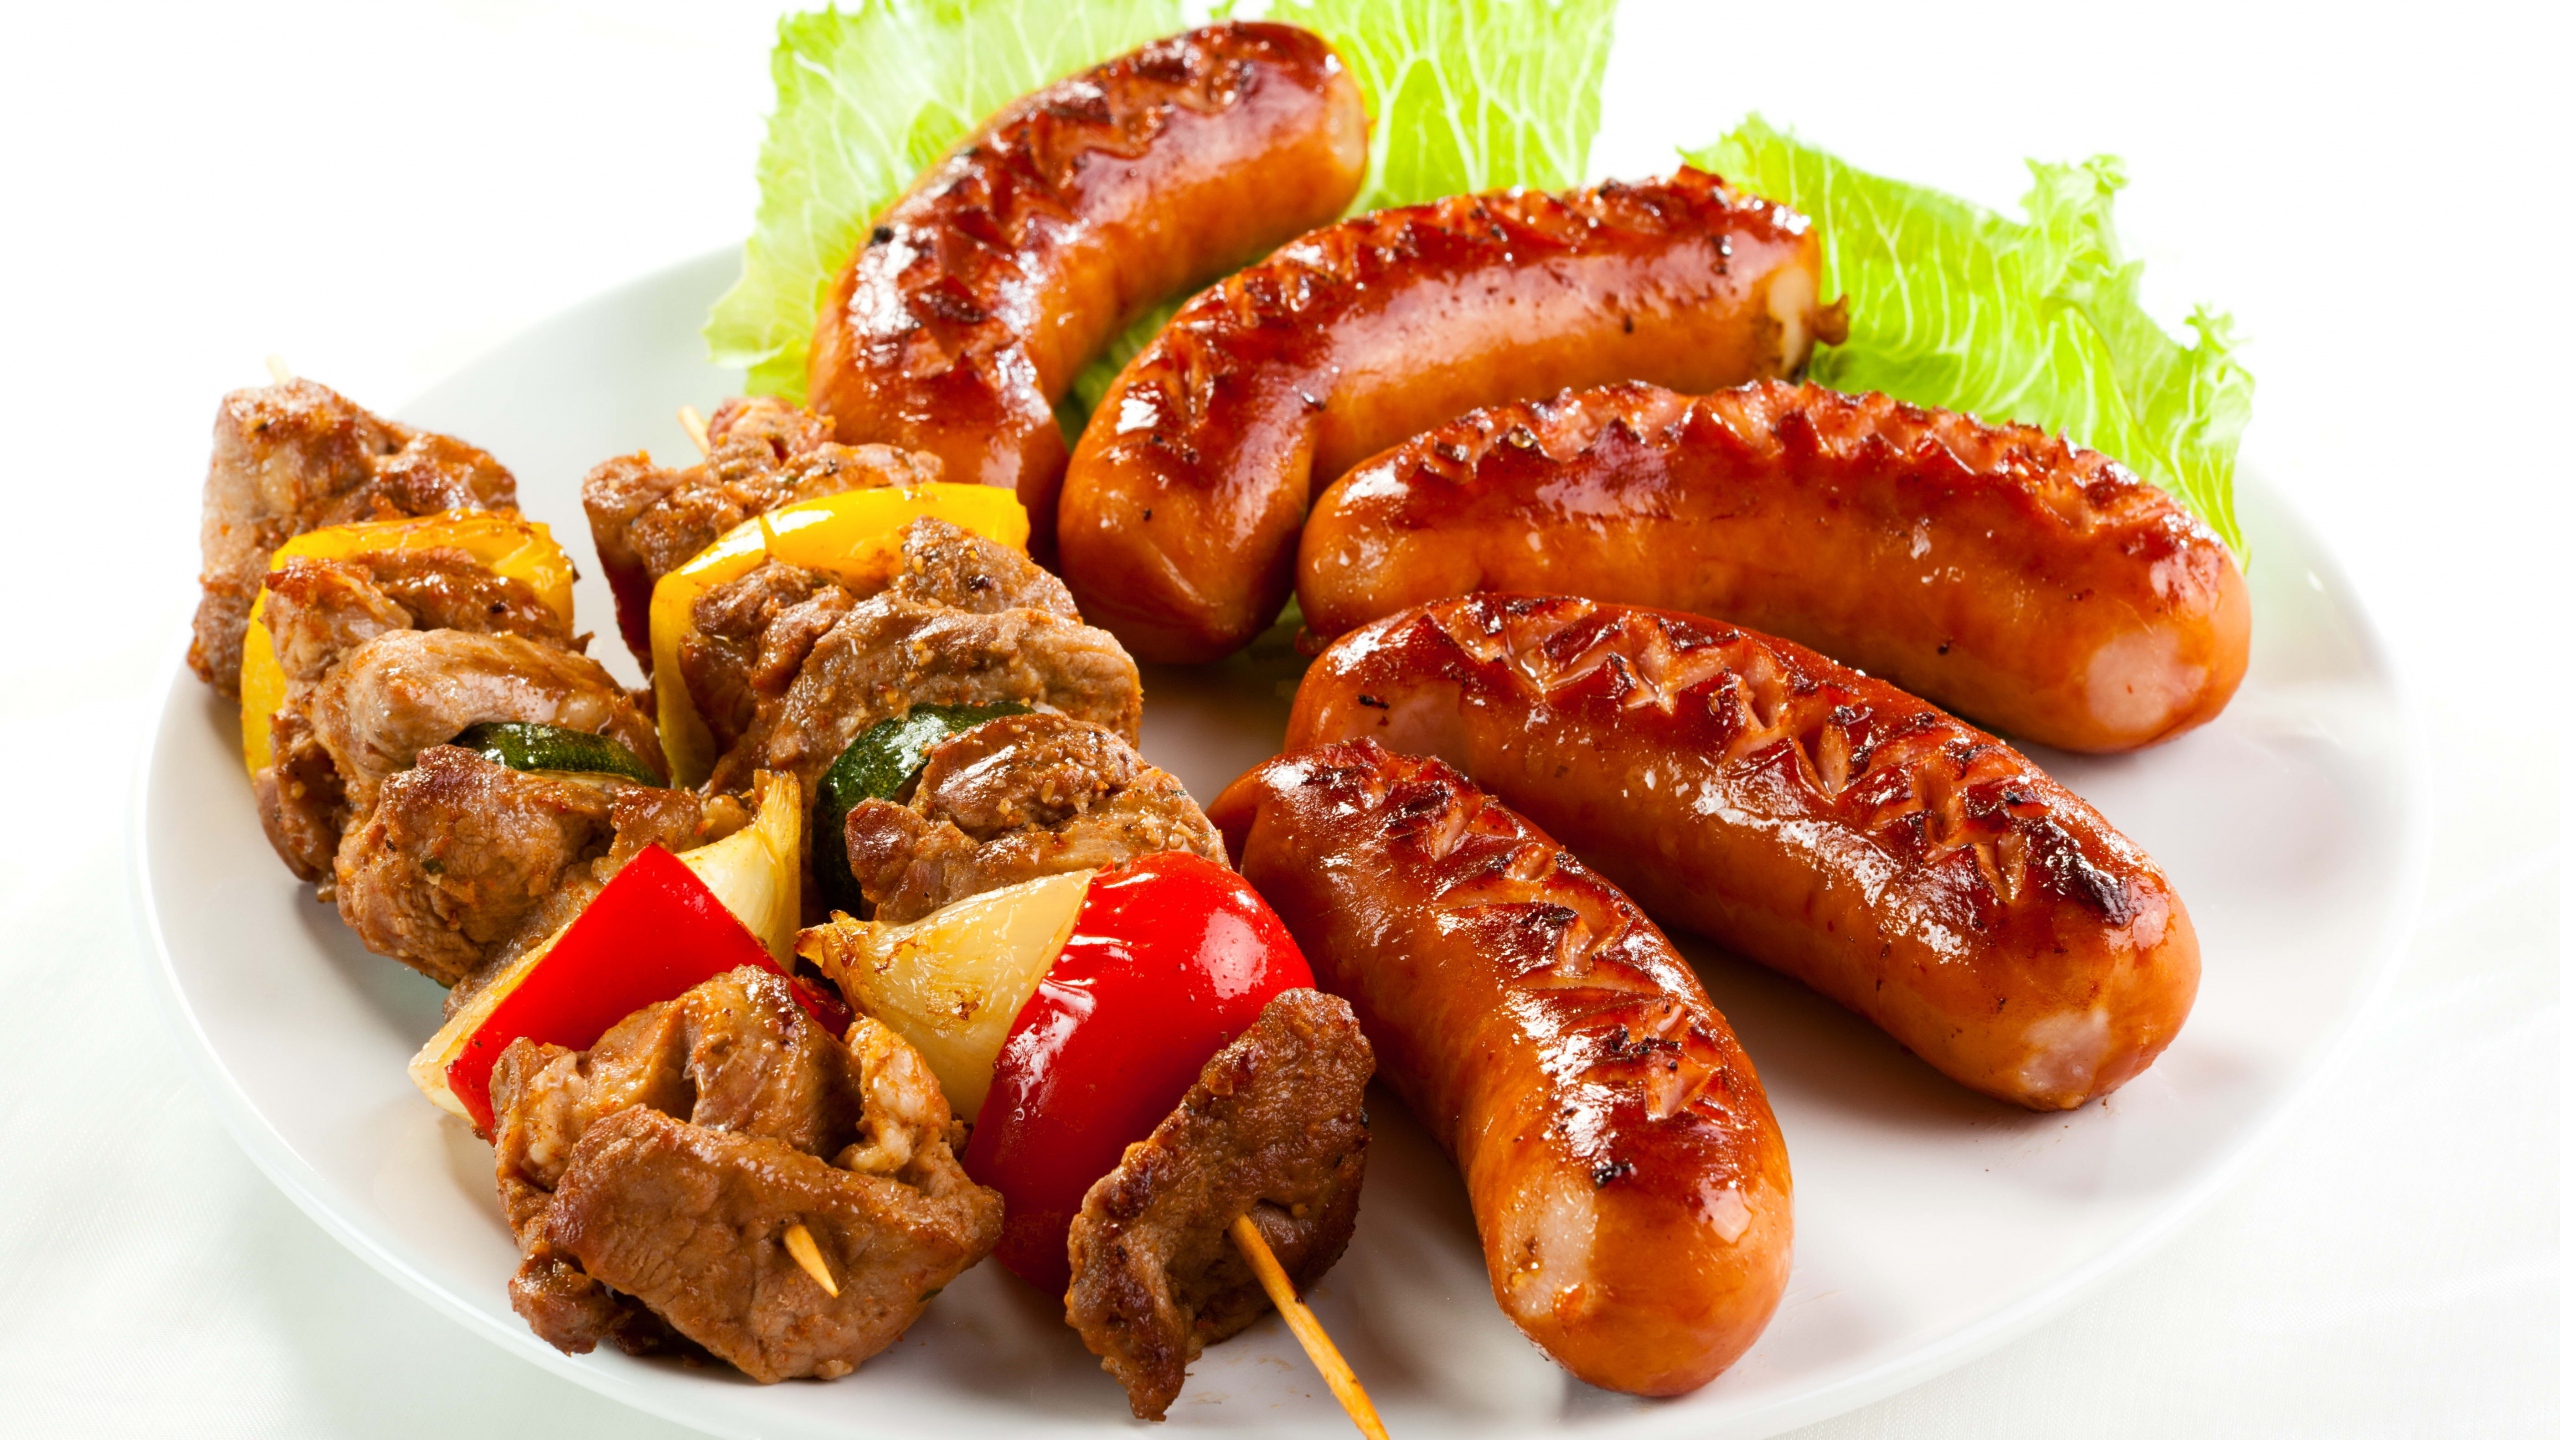 kebabs_sausages_herbs_plate_white_background_79163_2560x1440.jpg : 음식짤